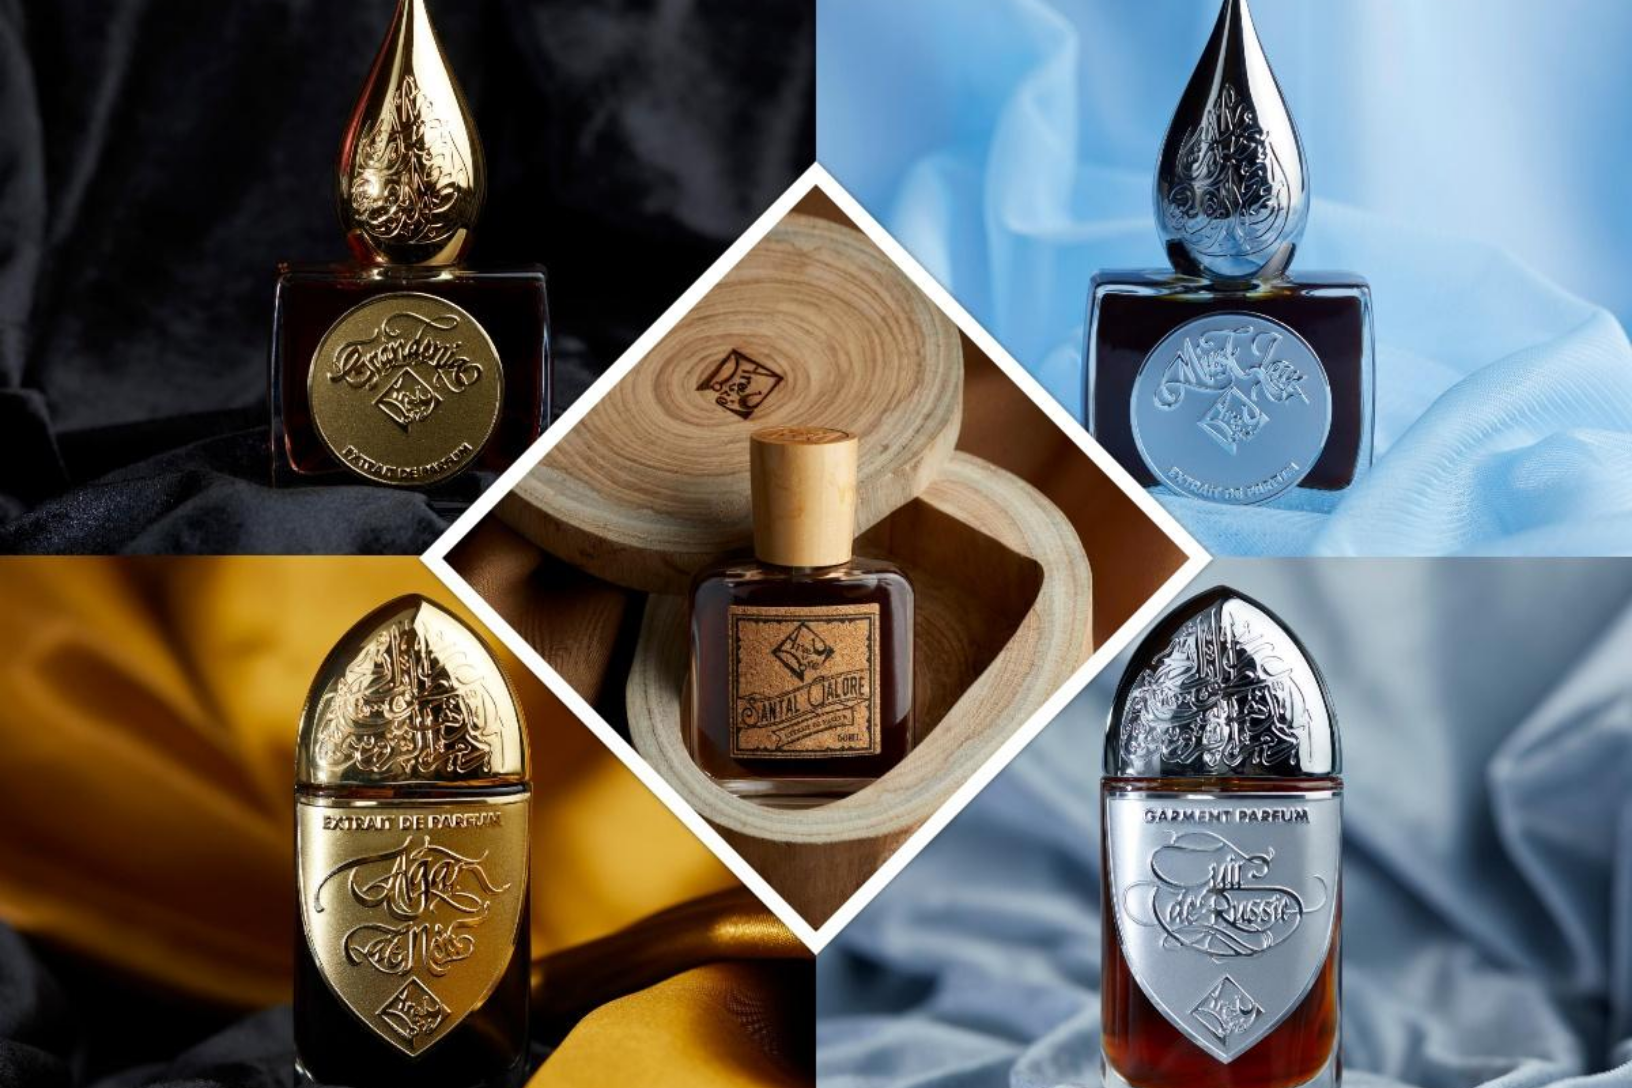 January Perfume News Round Up : Papillon Artisan Perfumes, Chanel